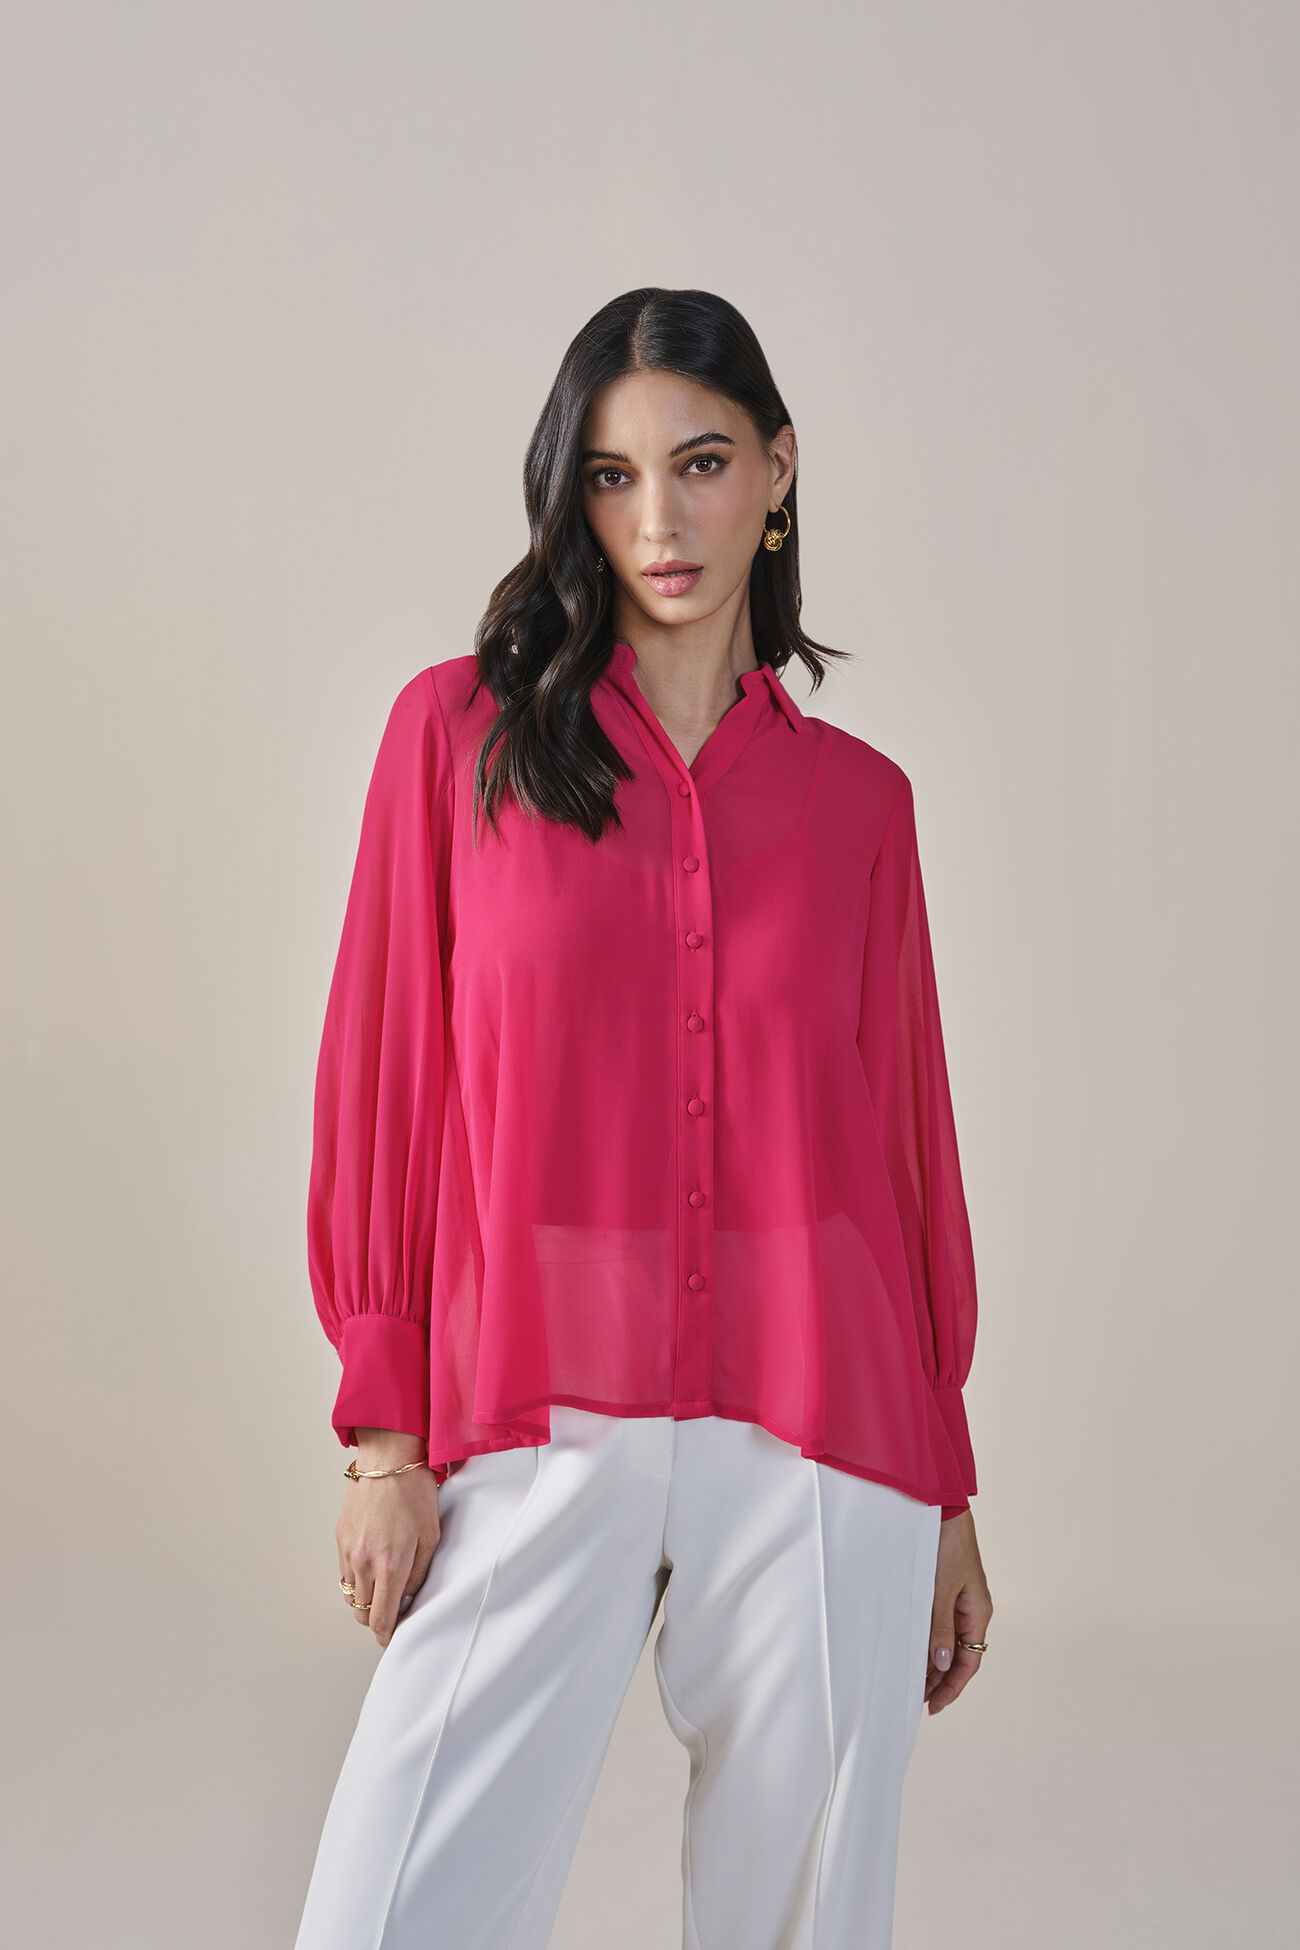 Sprinkle of Summer Solid Shirt, Dark Pink, image 1